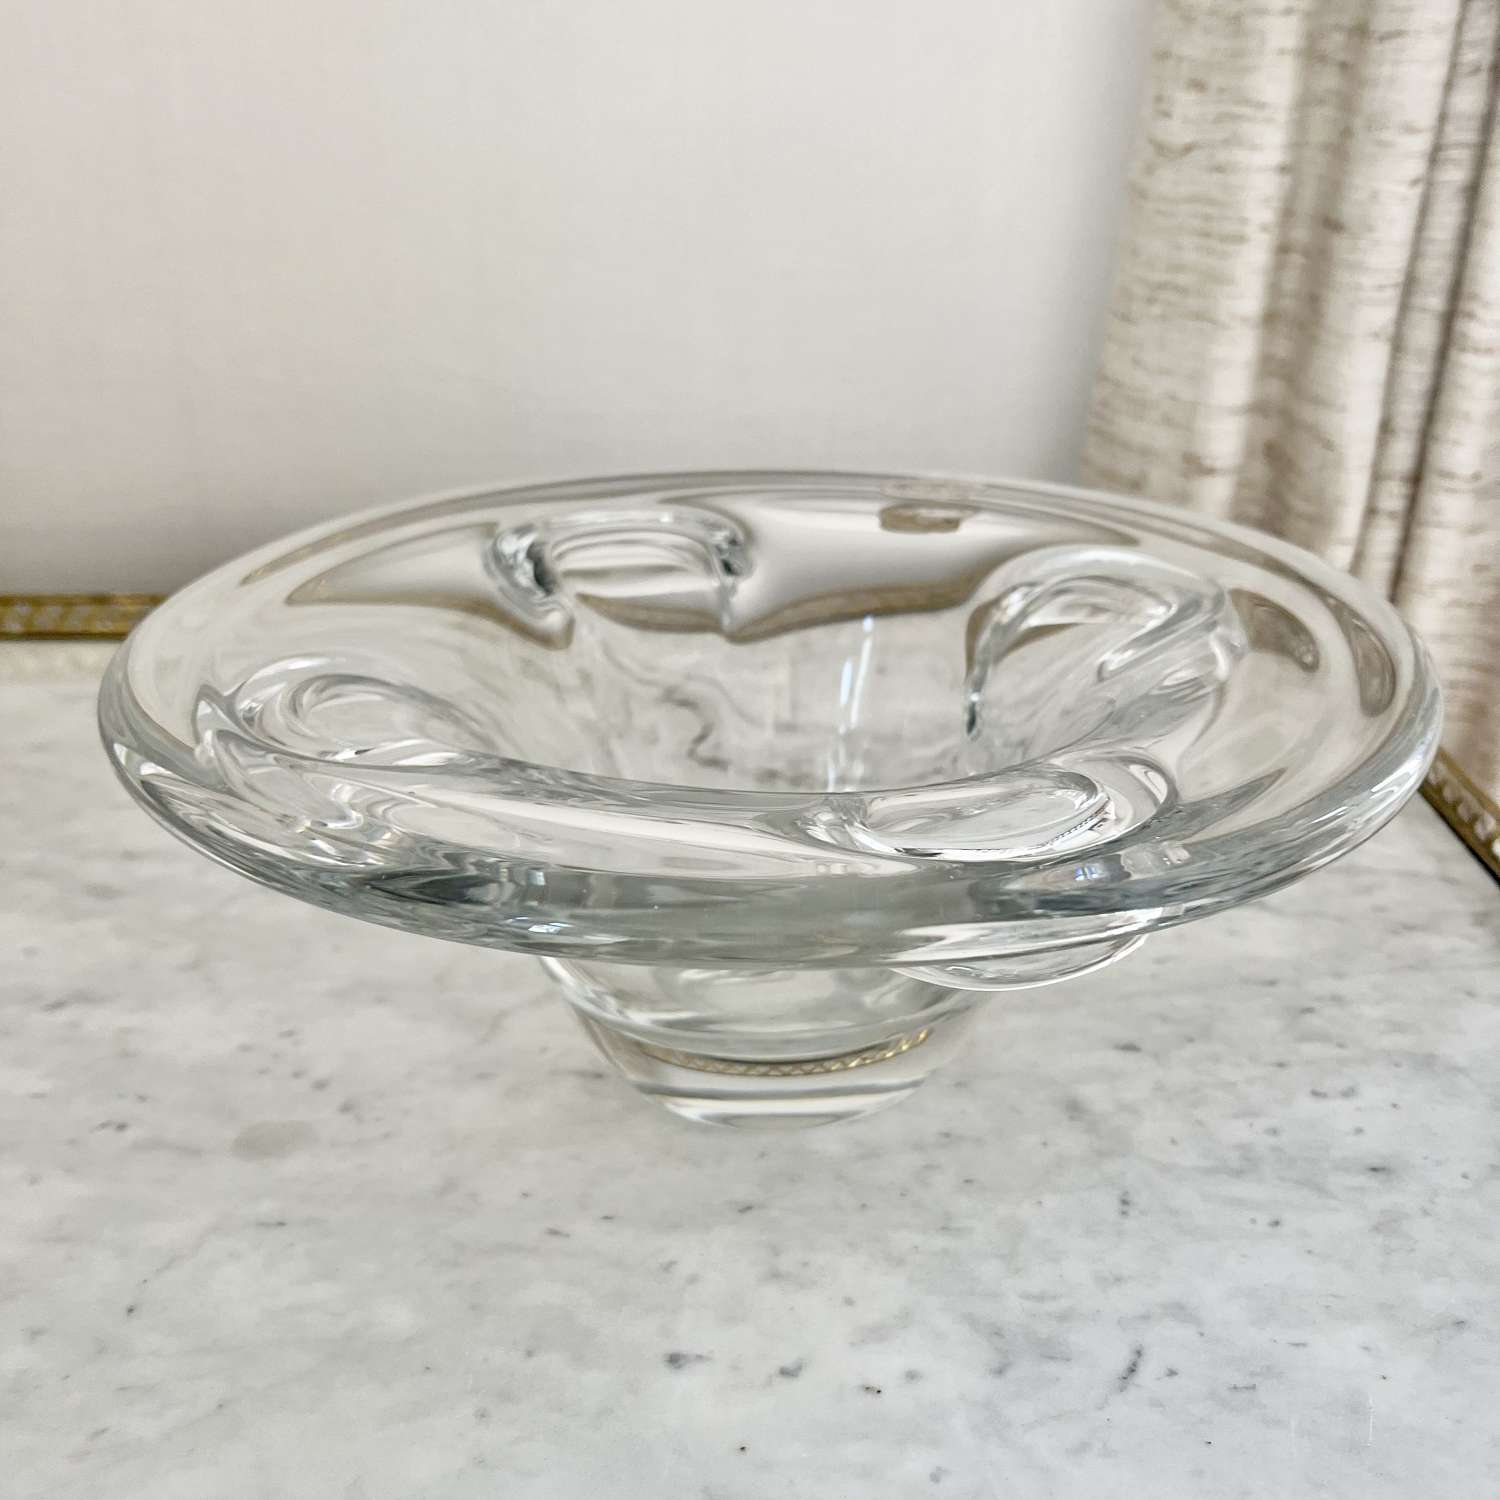 Large Modernist Crystal Bowl By Guido Bon For Val Saint Lambert